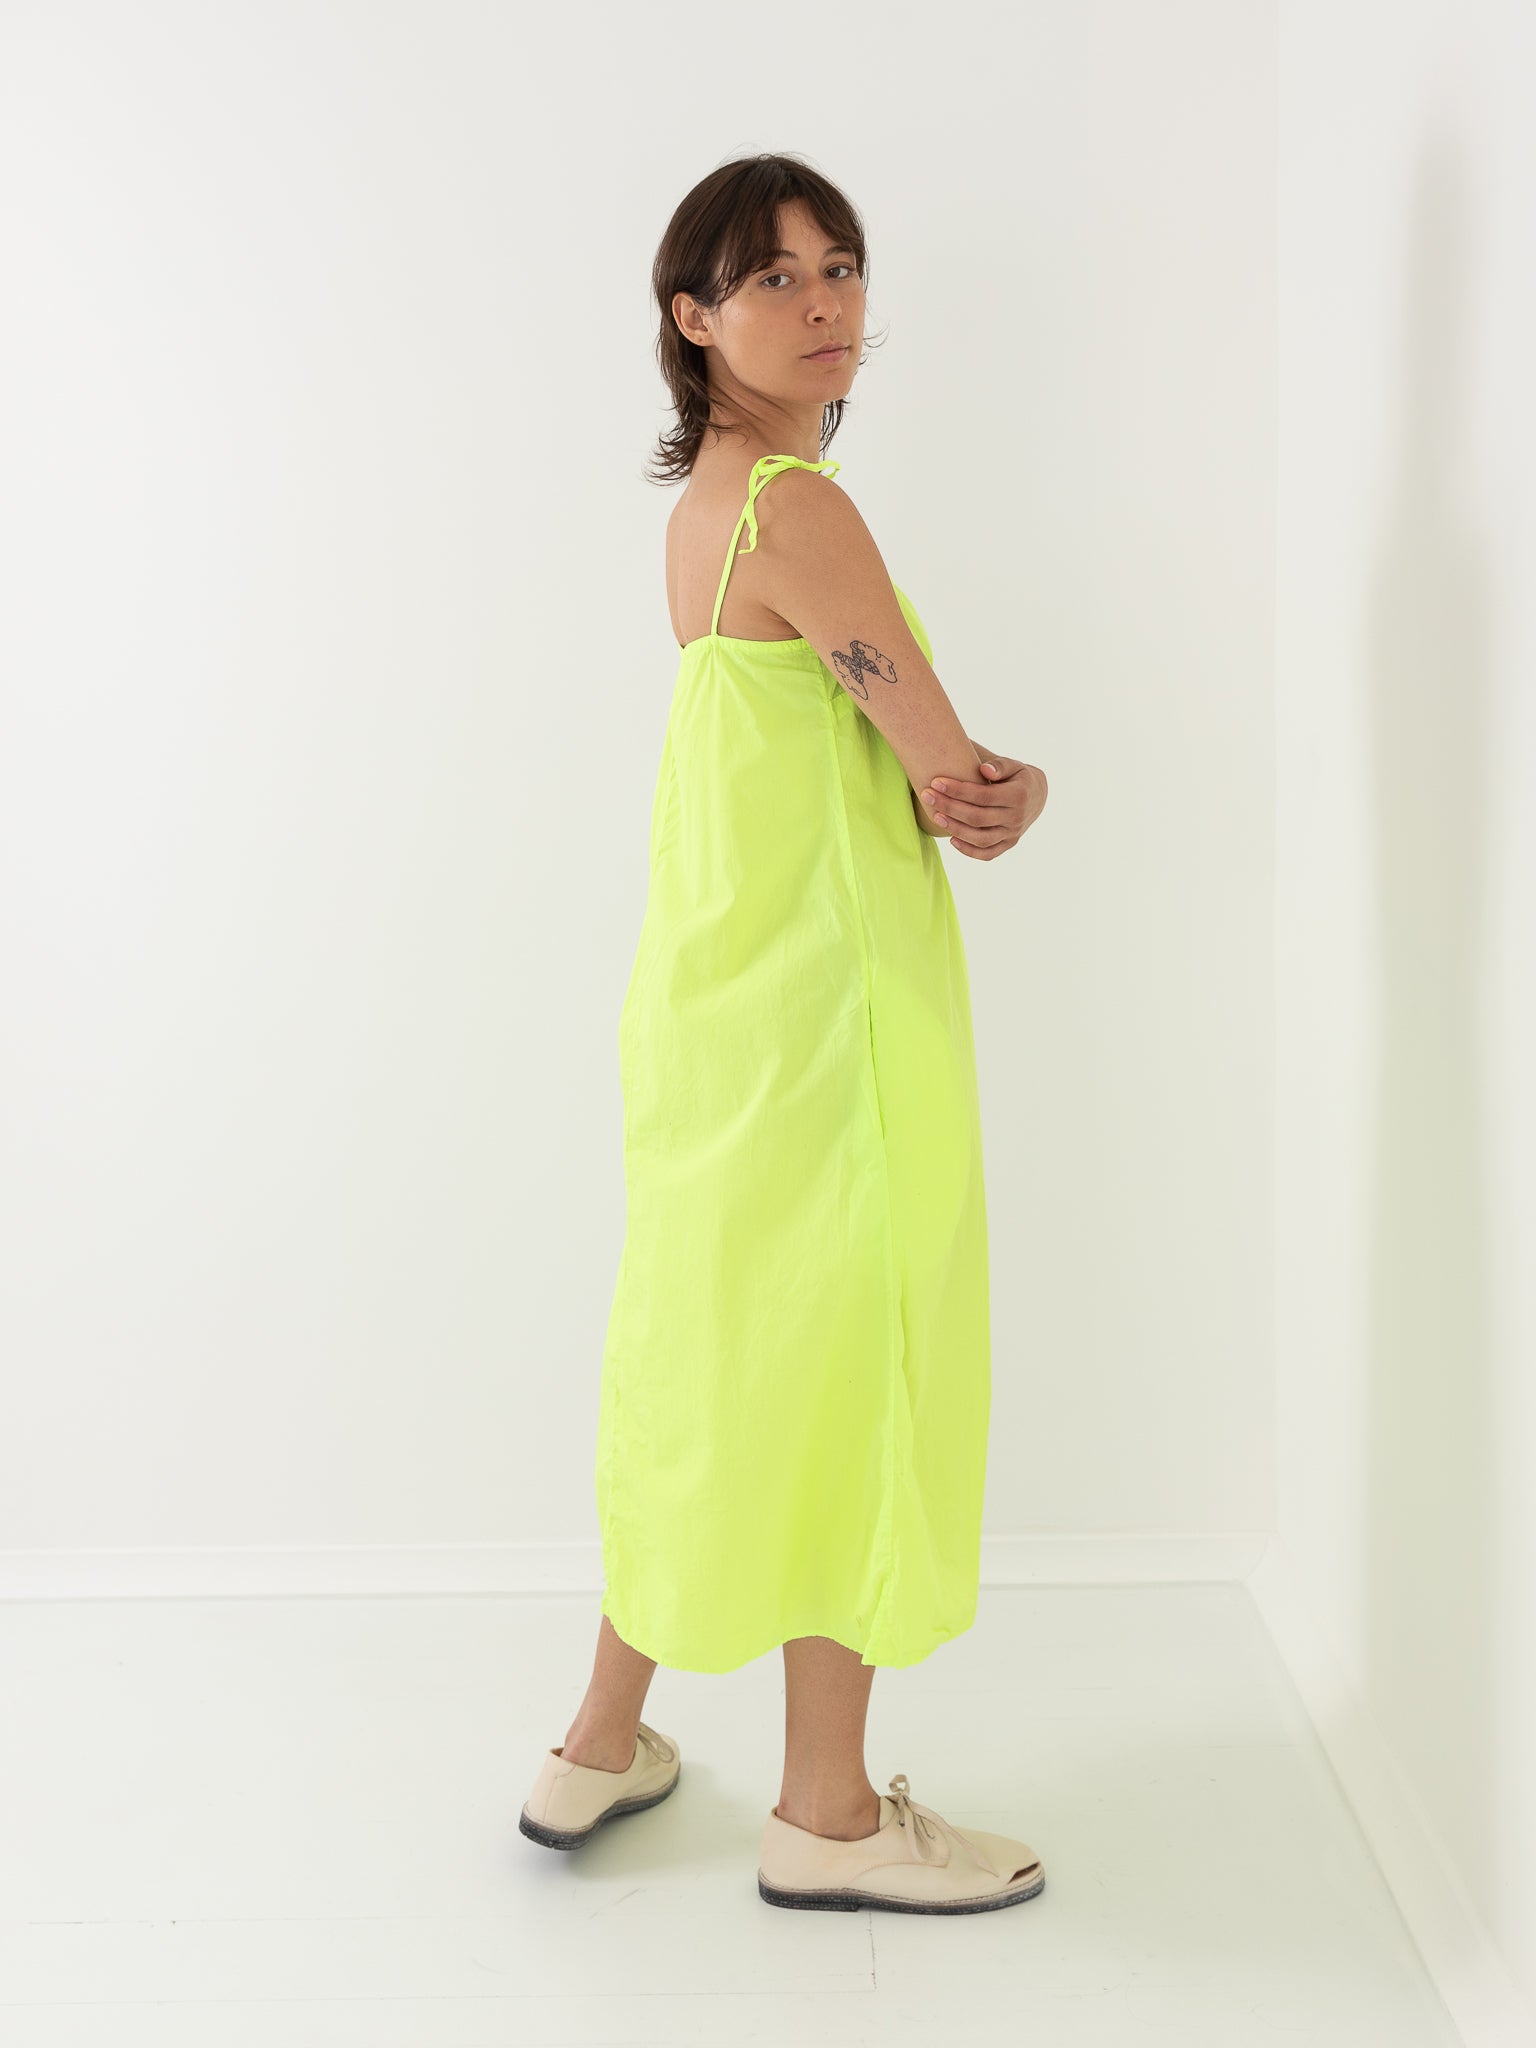 Nitto Sopraveste Dress, Lime - Worthwhile, Inc.